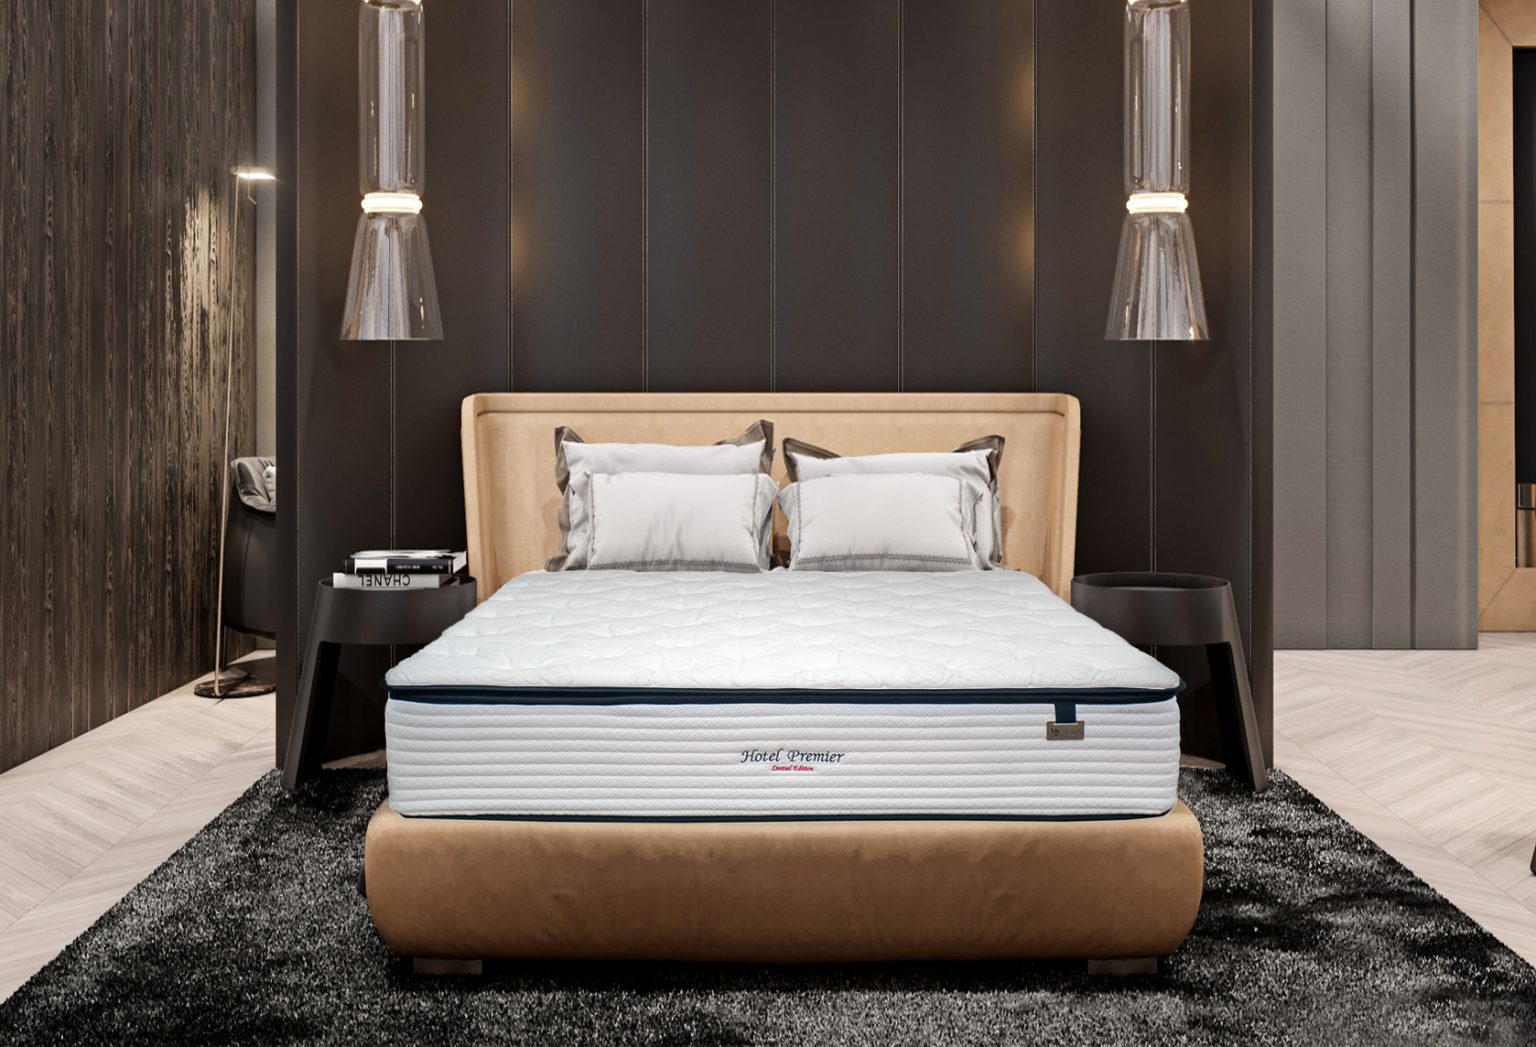 hotel premier collection 12 premium mattress reviews